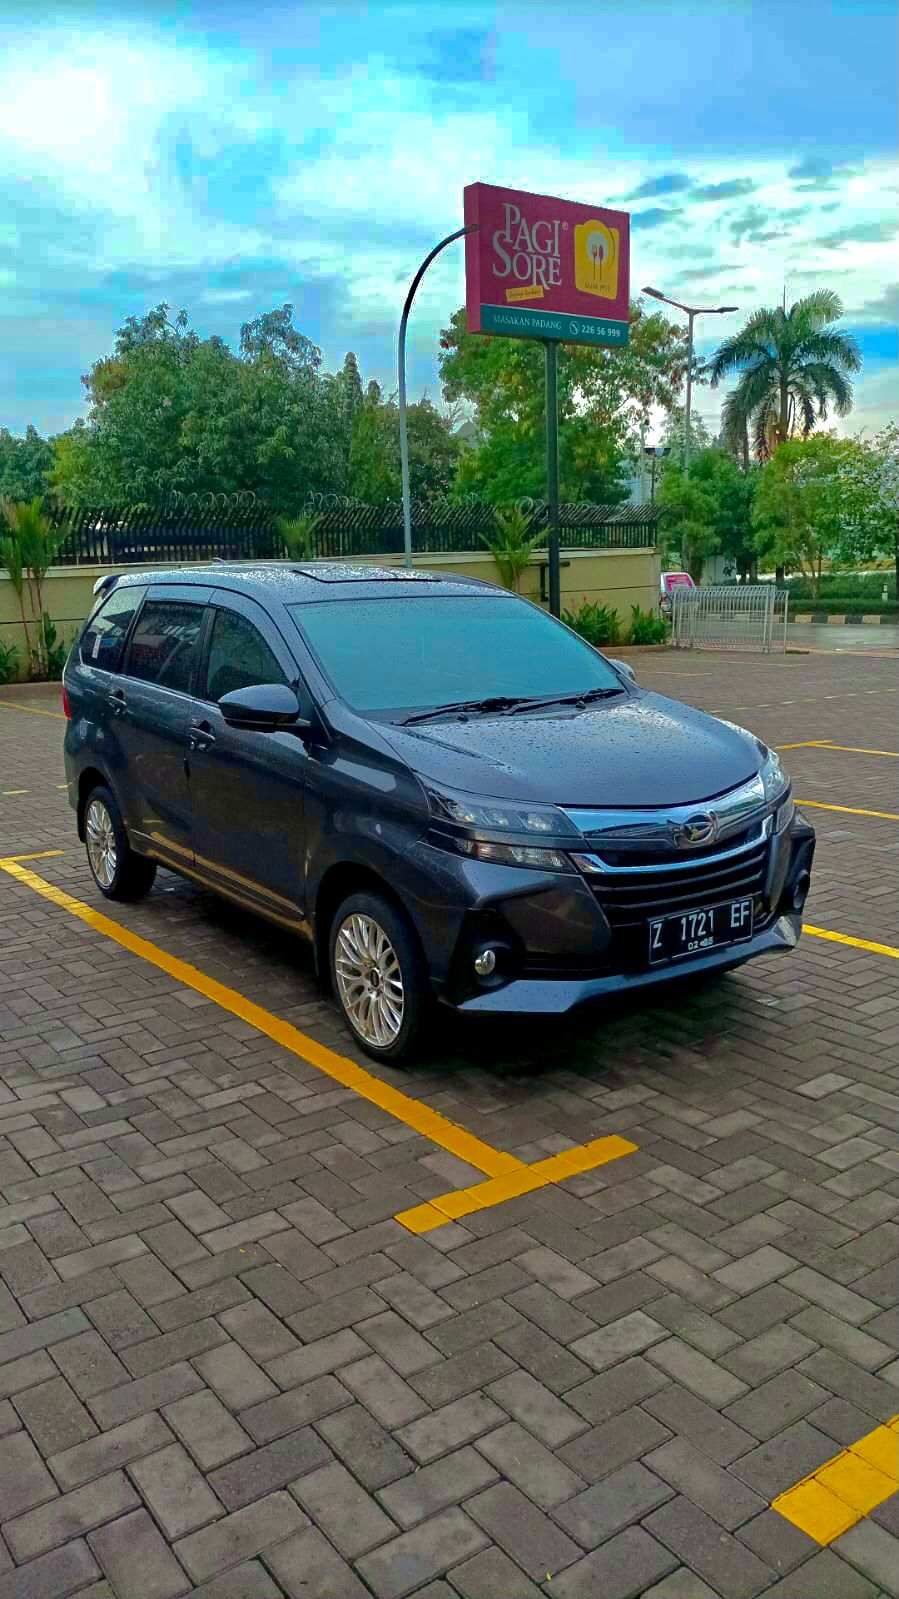 Rental Mobil Avanza Di Bogor